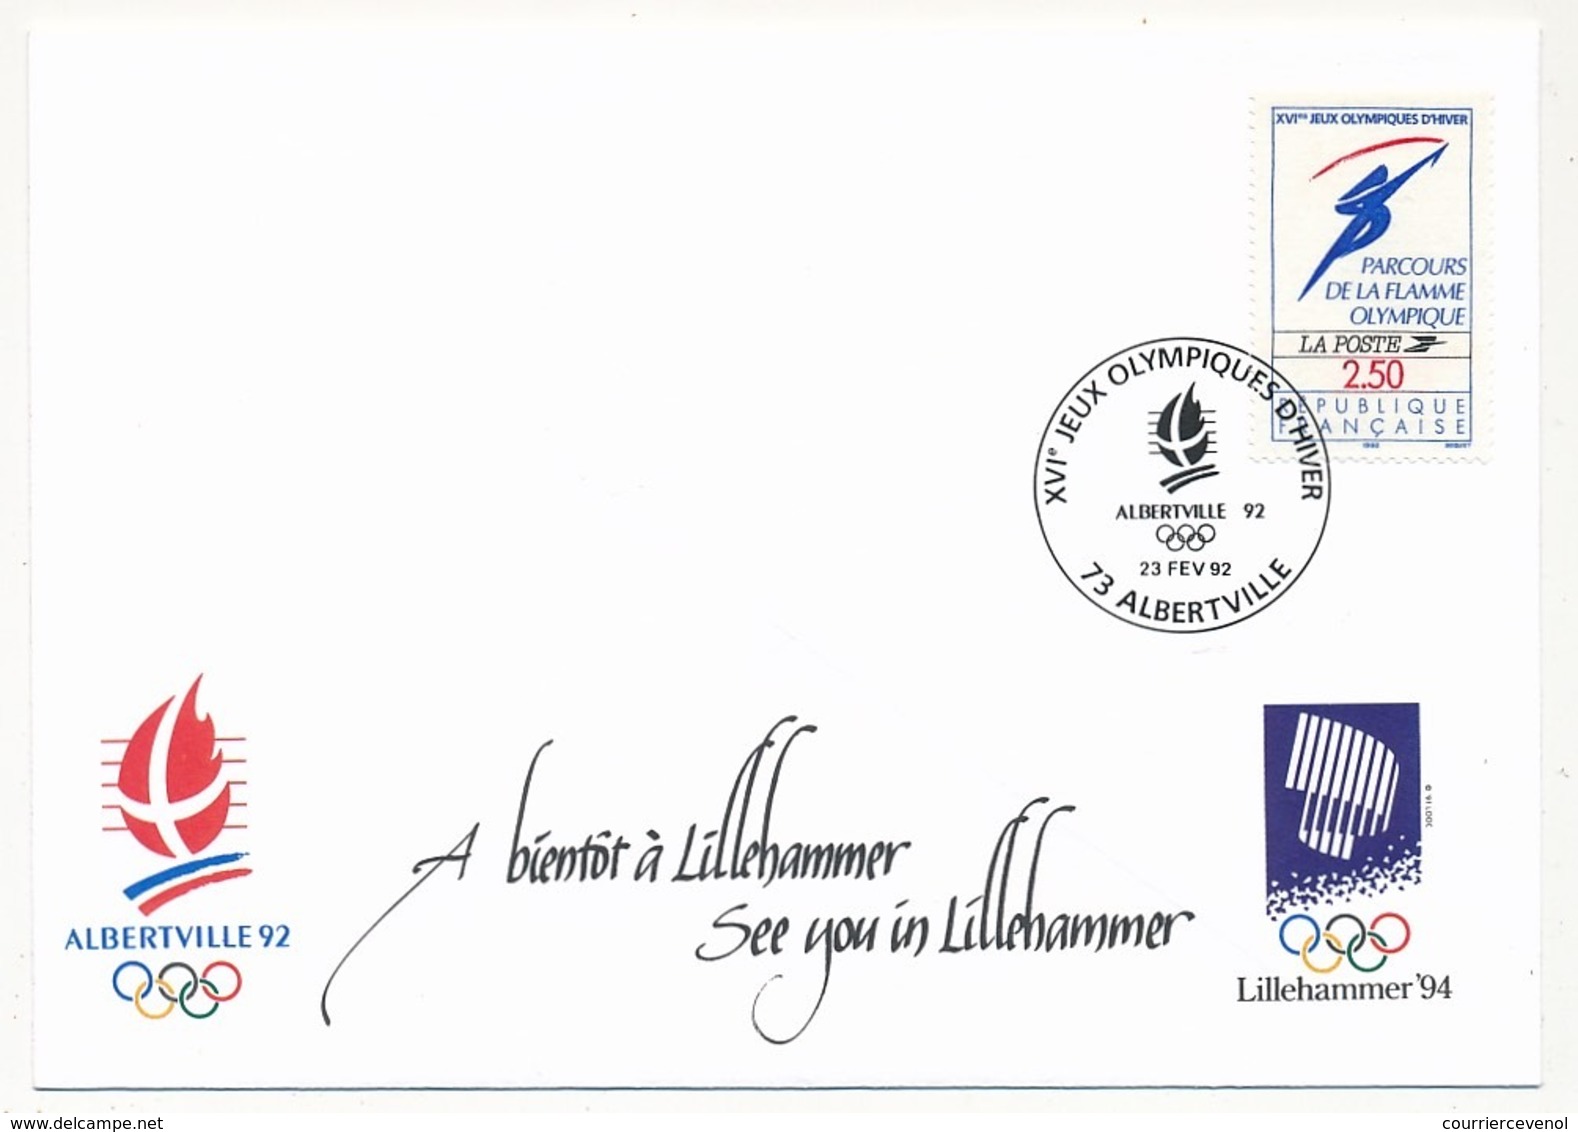 FRANC - 13 Enveloppes FDC - JEUX OLYMPIQUES D'HIVER - ALBERTVILLE - 1990/91